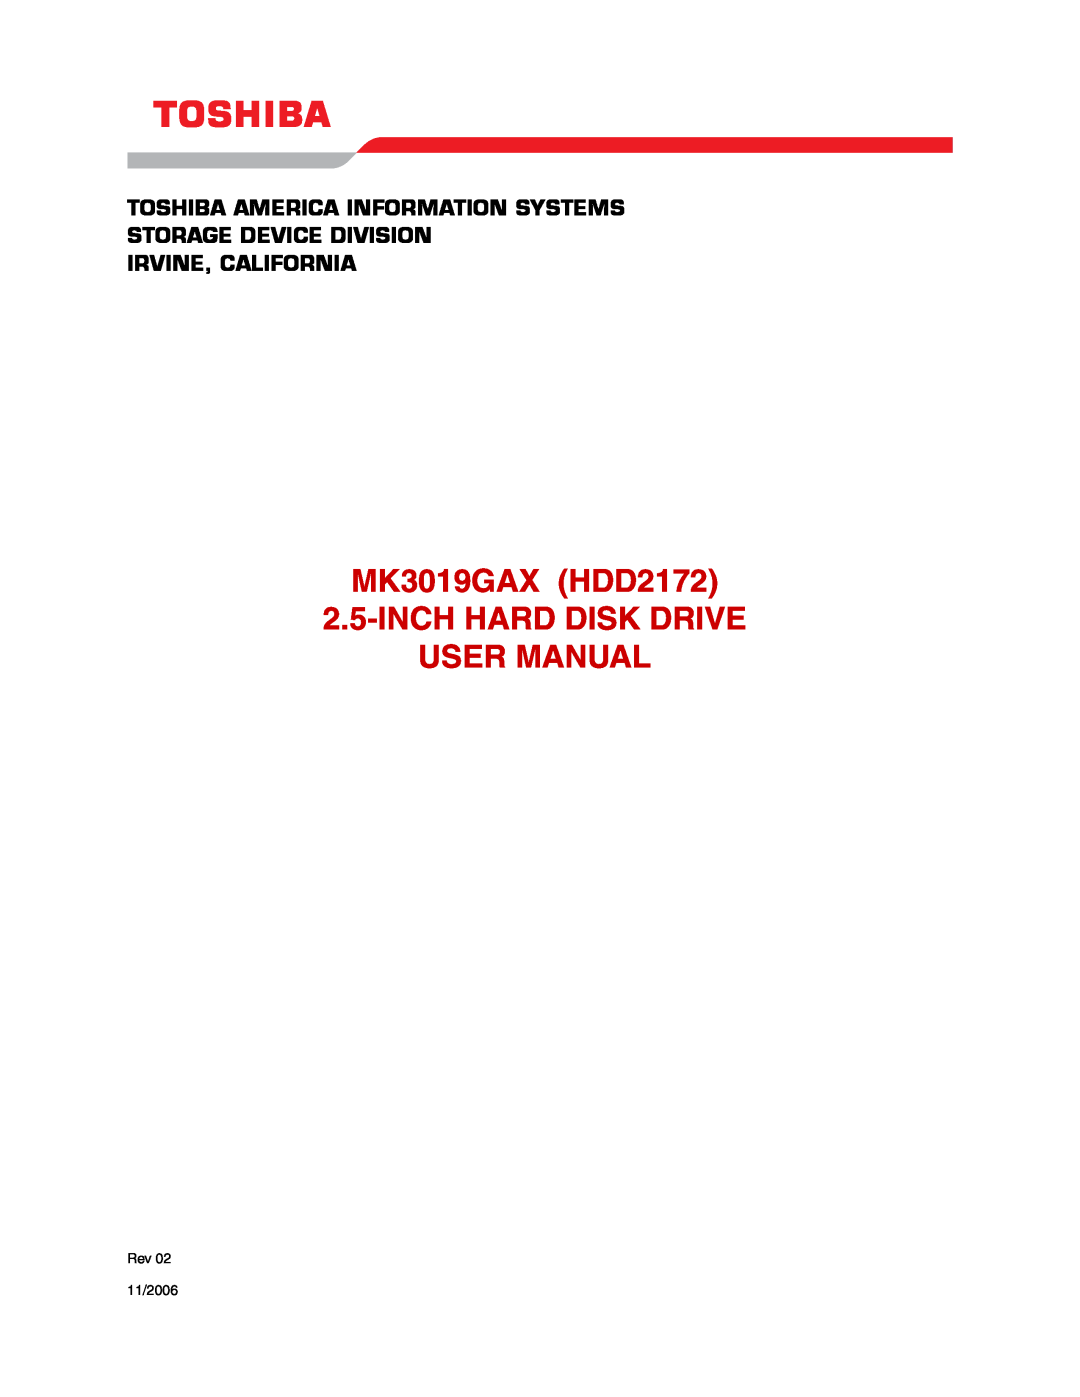 Toshiba user manual MK3019GAX HDD2172 2.5-INCH HARD DISK DRIVE USER MANUAL, Irvine, California, Rev 11/2006 